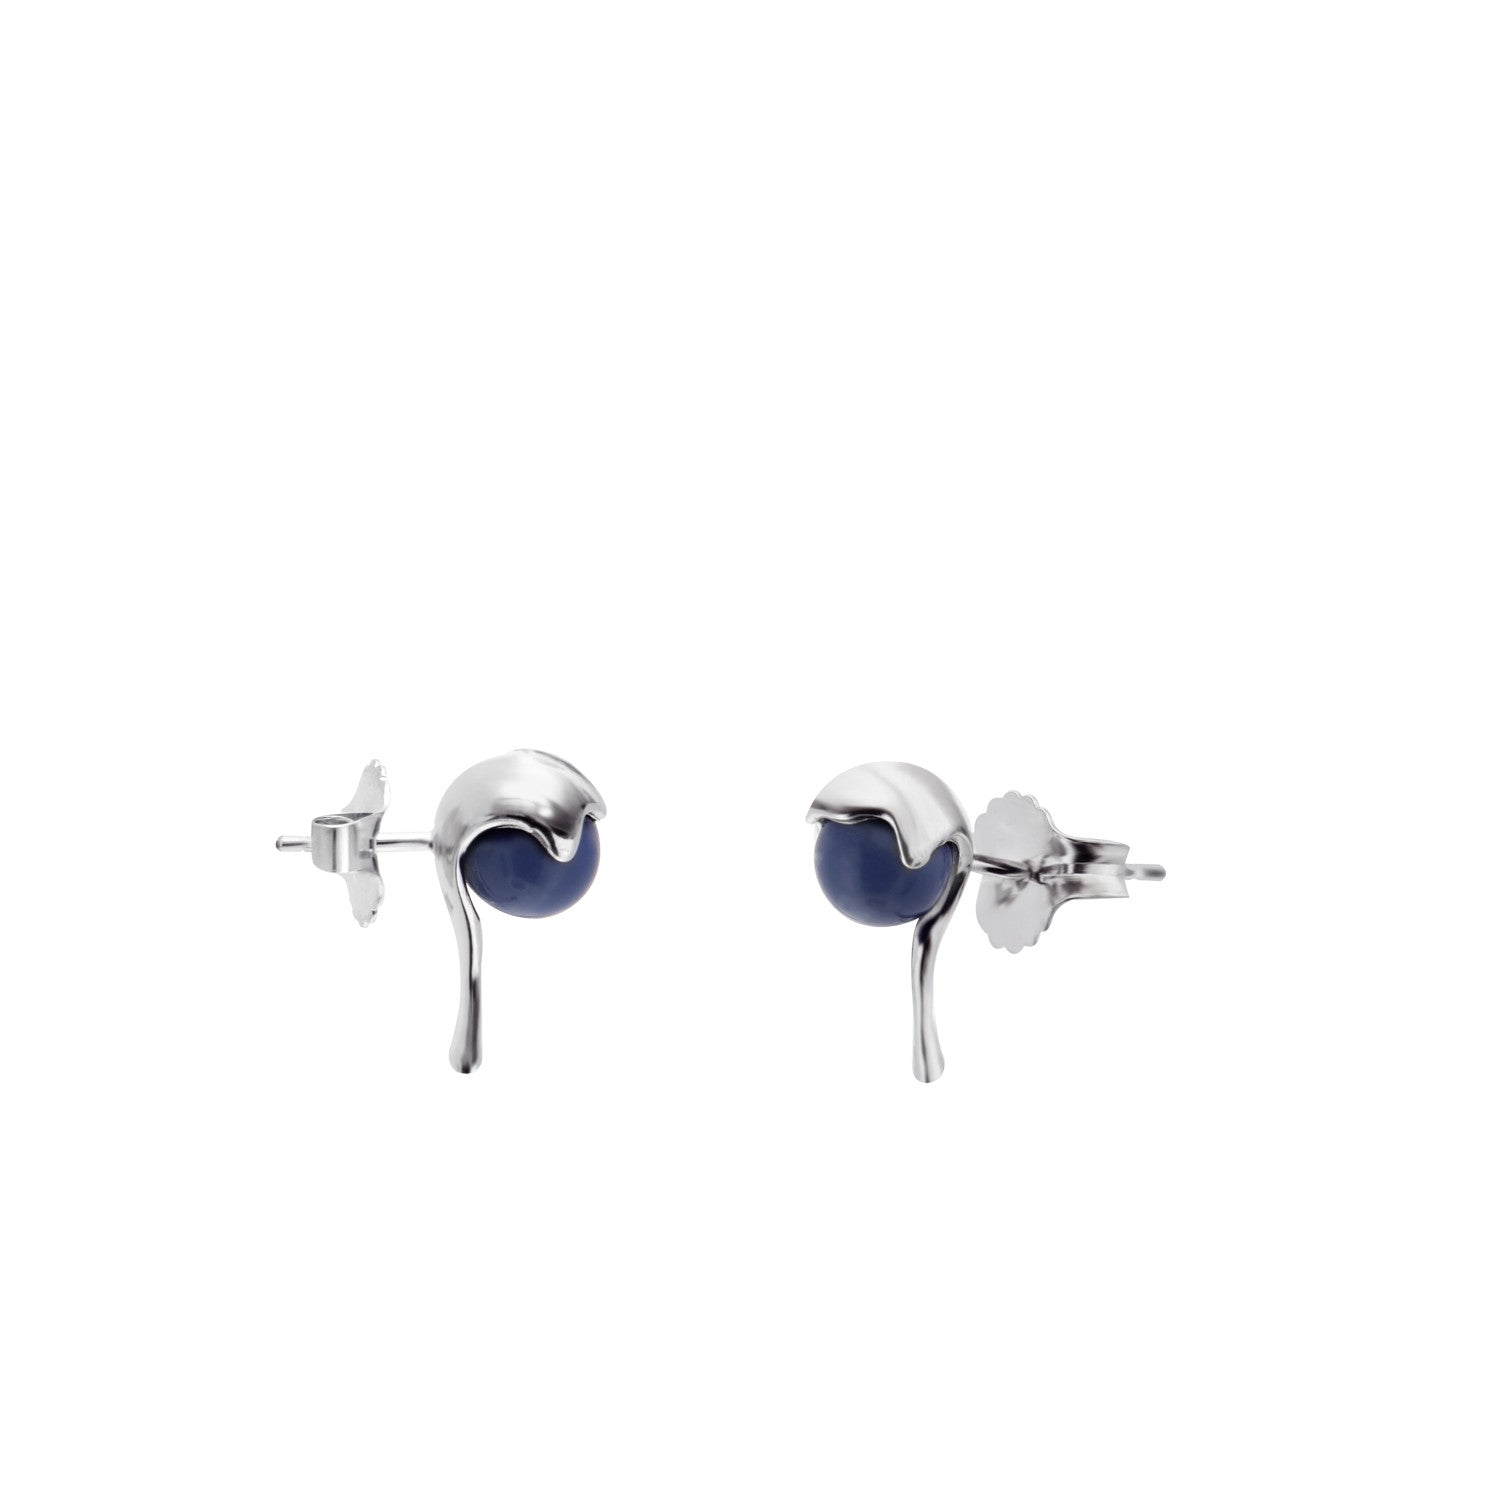 Earrings - Original earrings with liquid enamel design